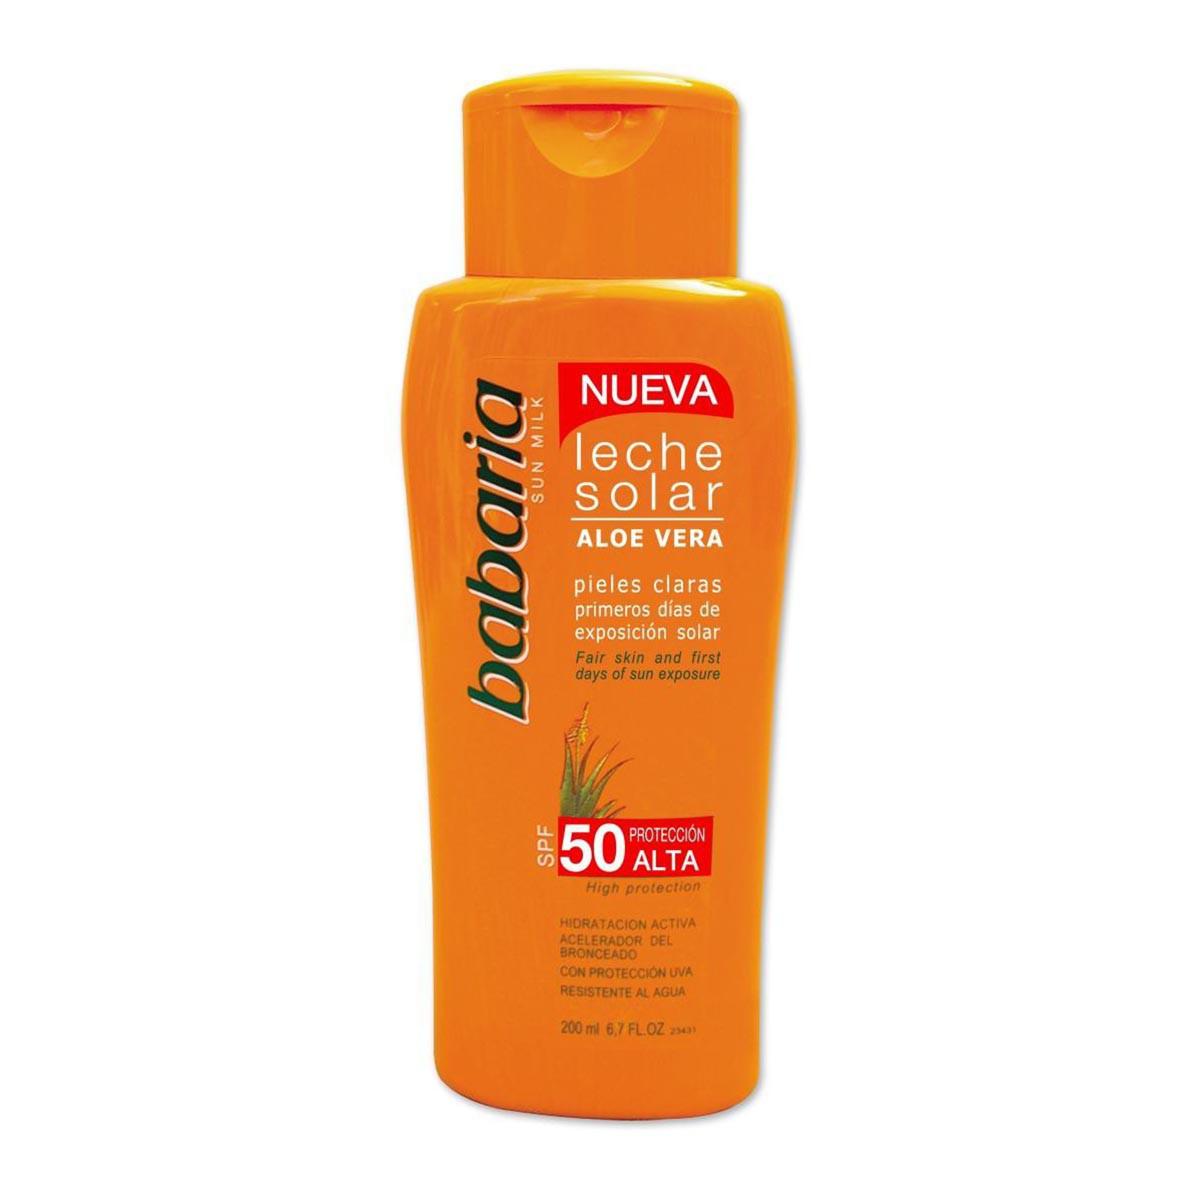 babaria-solar-milk-aloe-vera-clear-skin-first-days-of-sun-exposure-spf50-high-protection-200ml